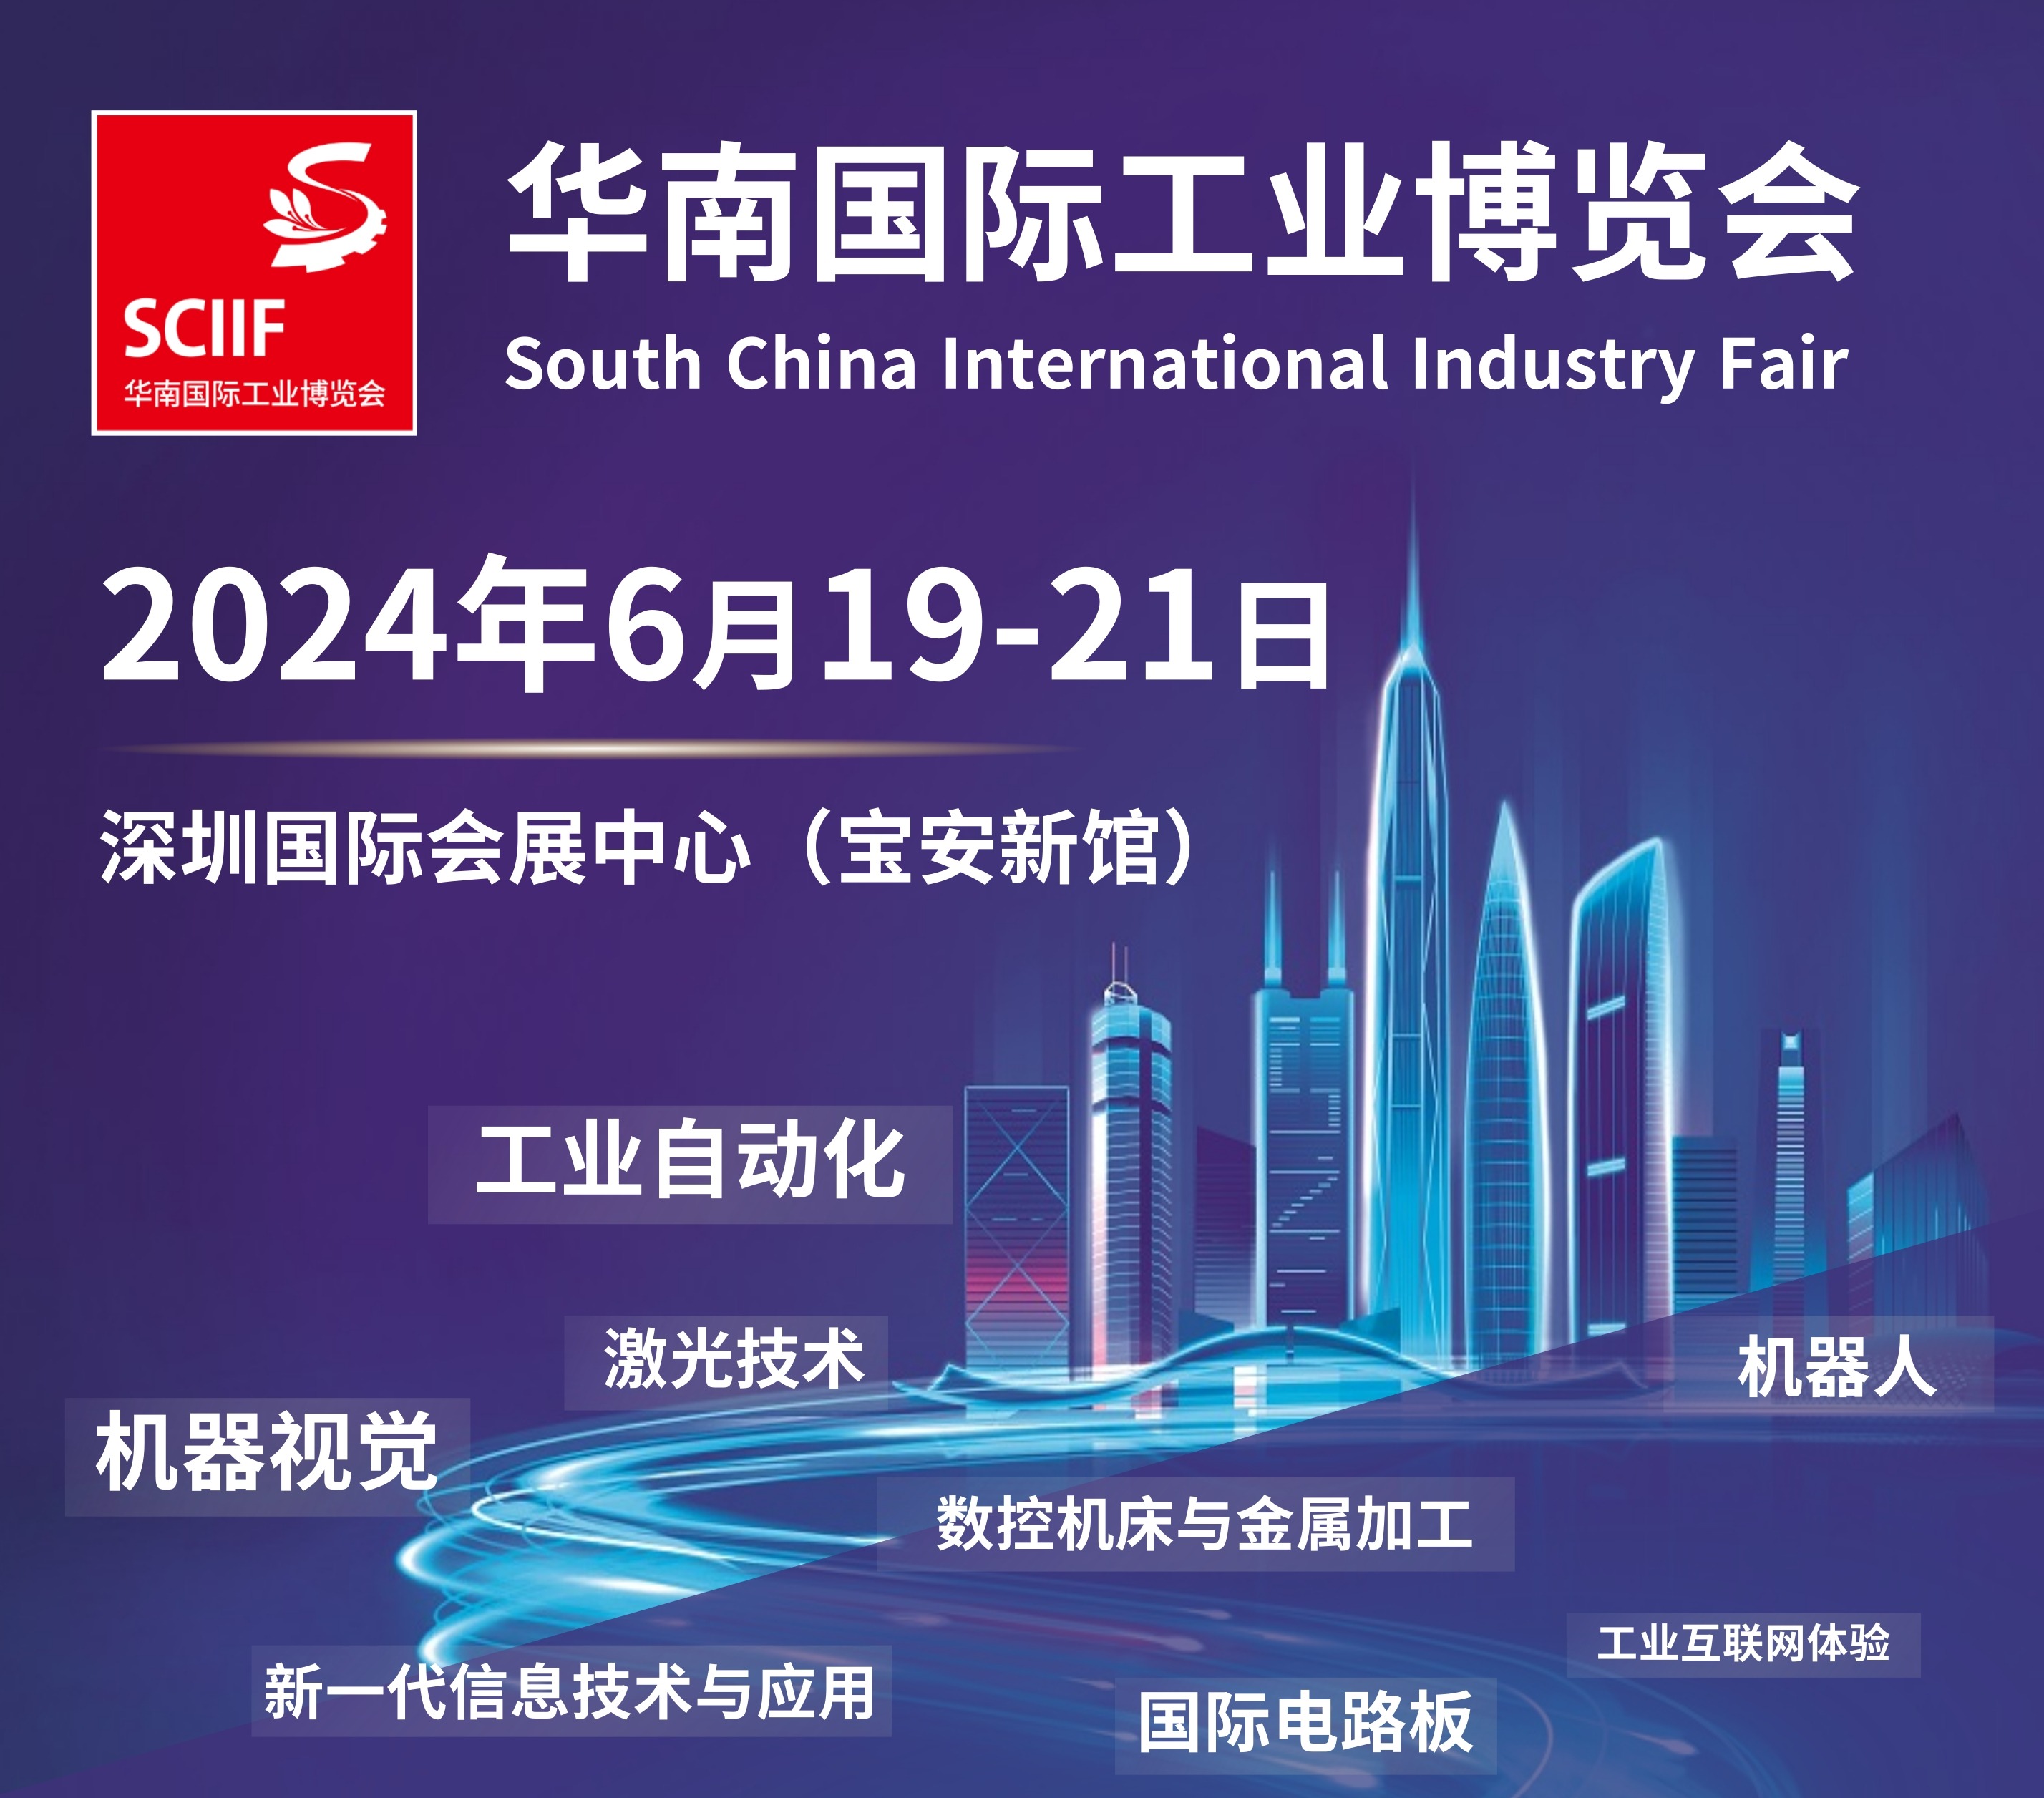 South China International Industry Fair(SCIIF)